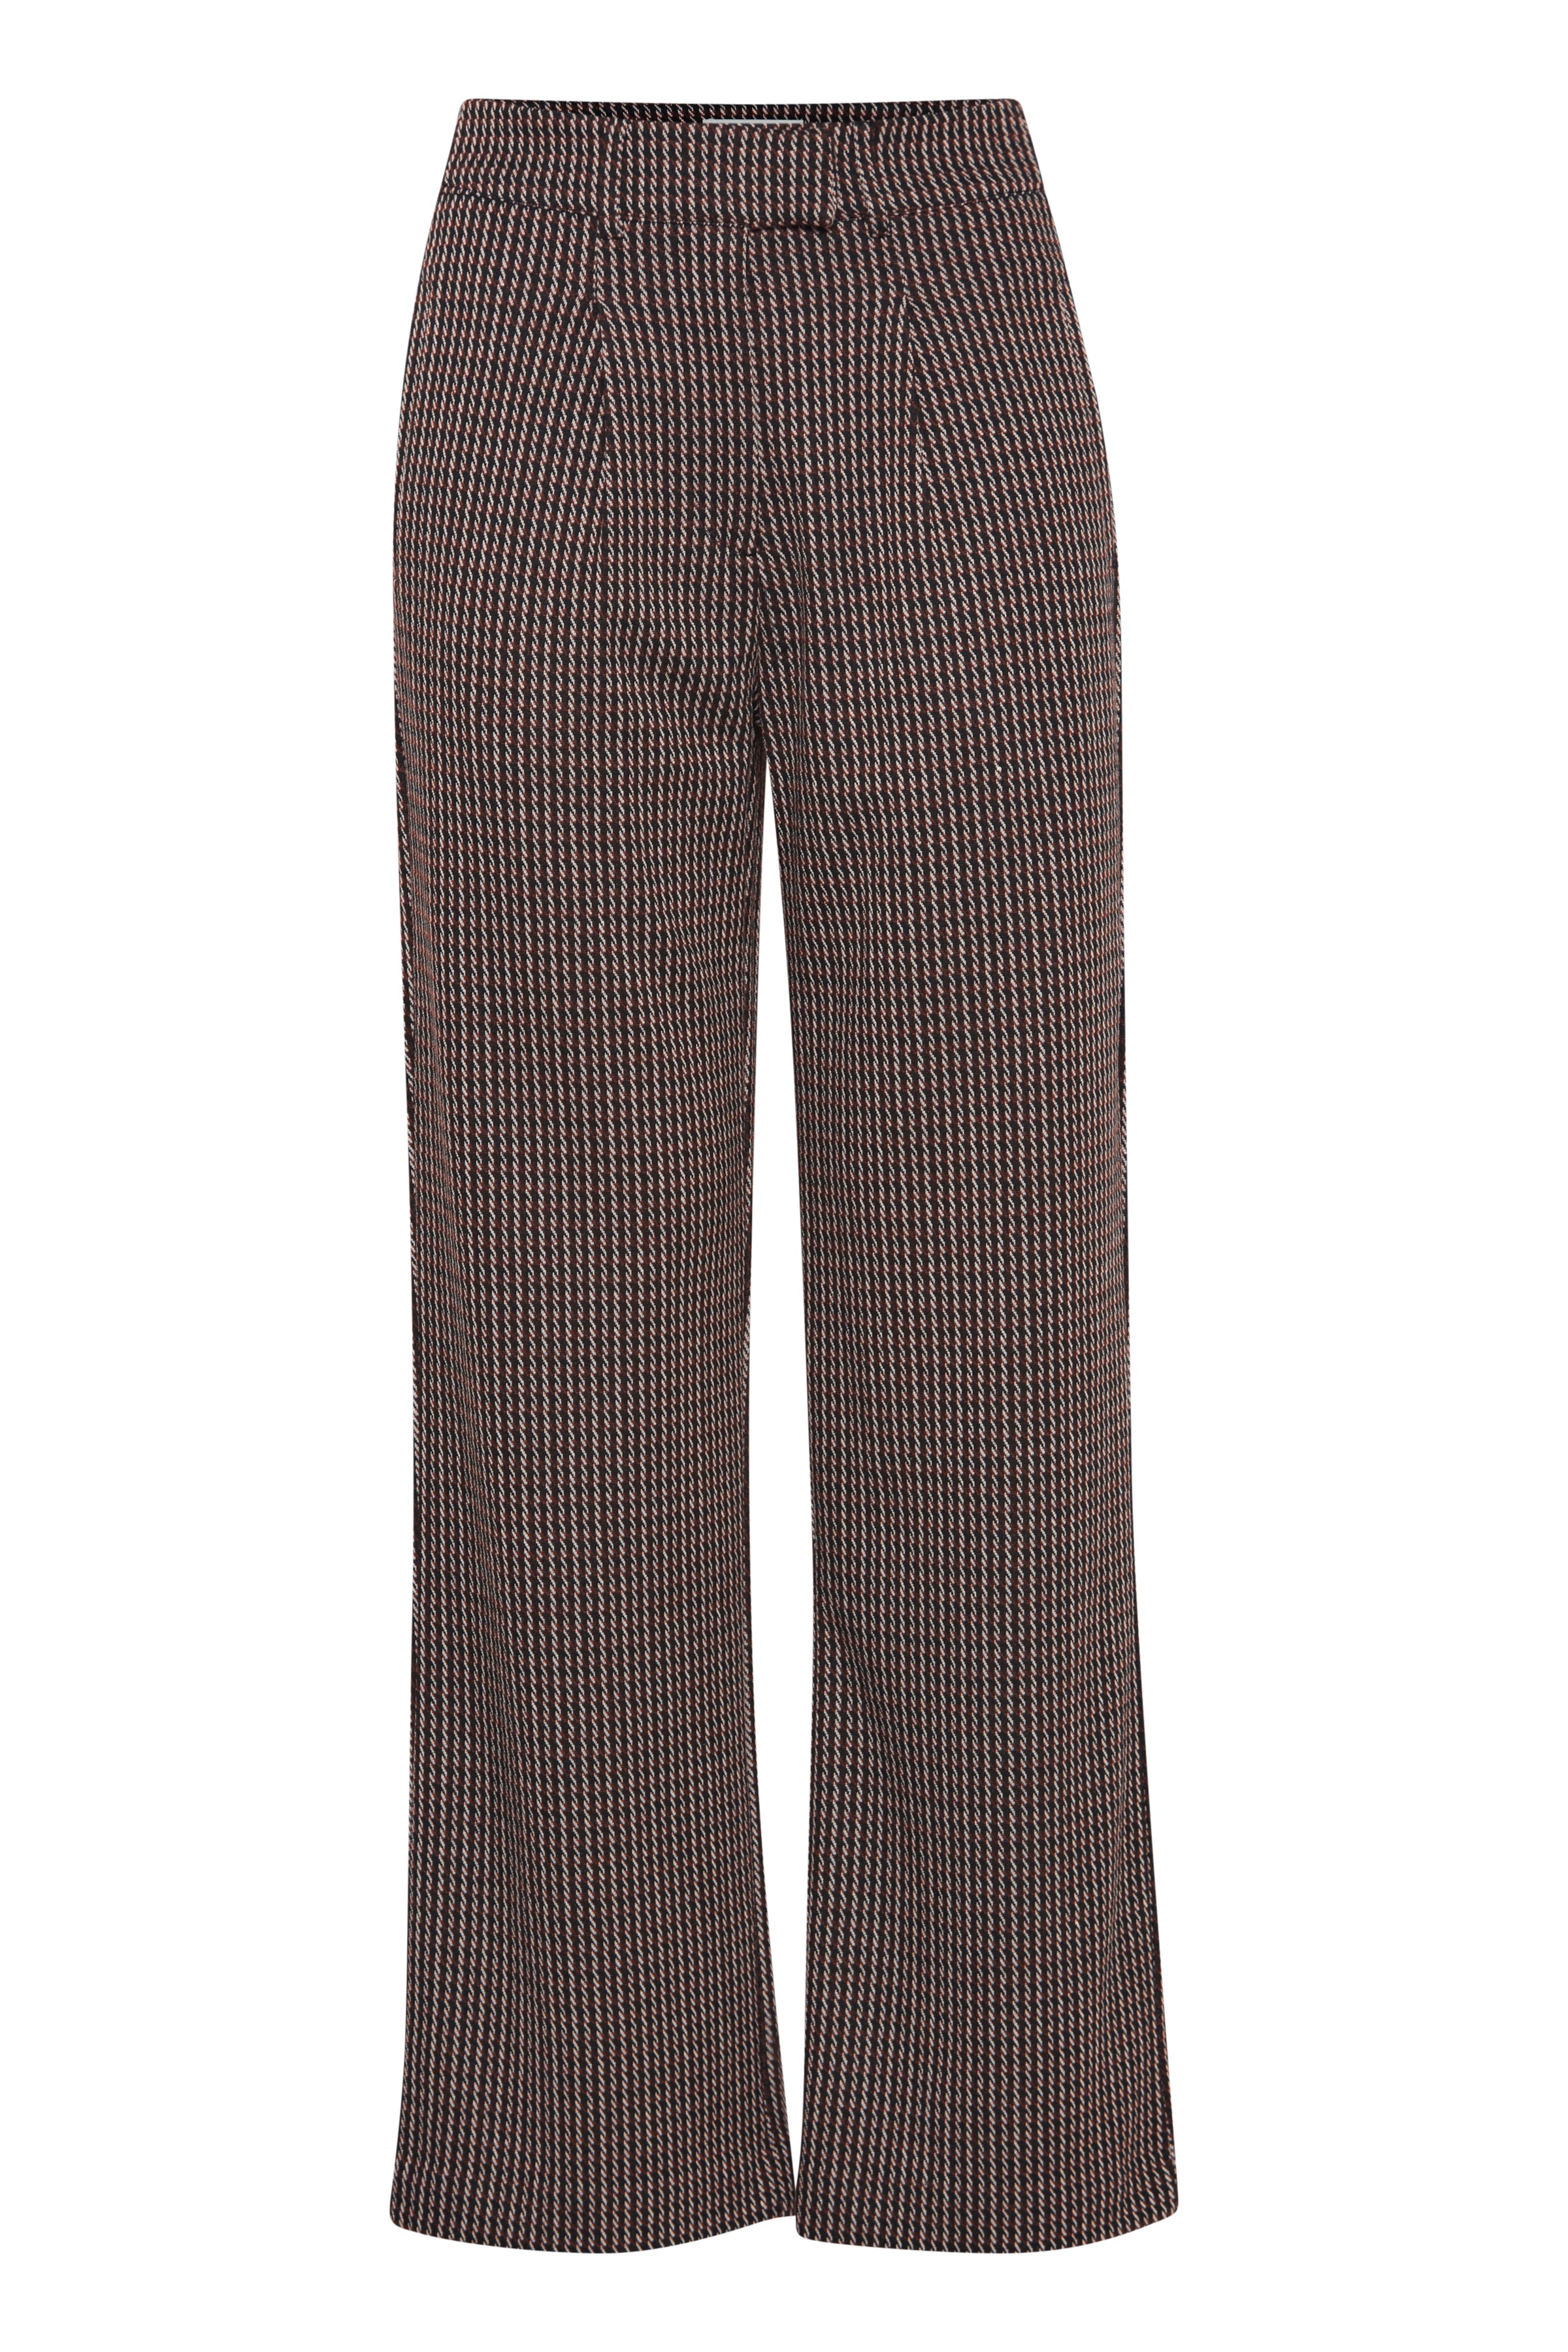 Ihkate structure burgundy checkered pants | Ichi